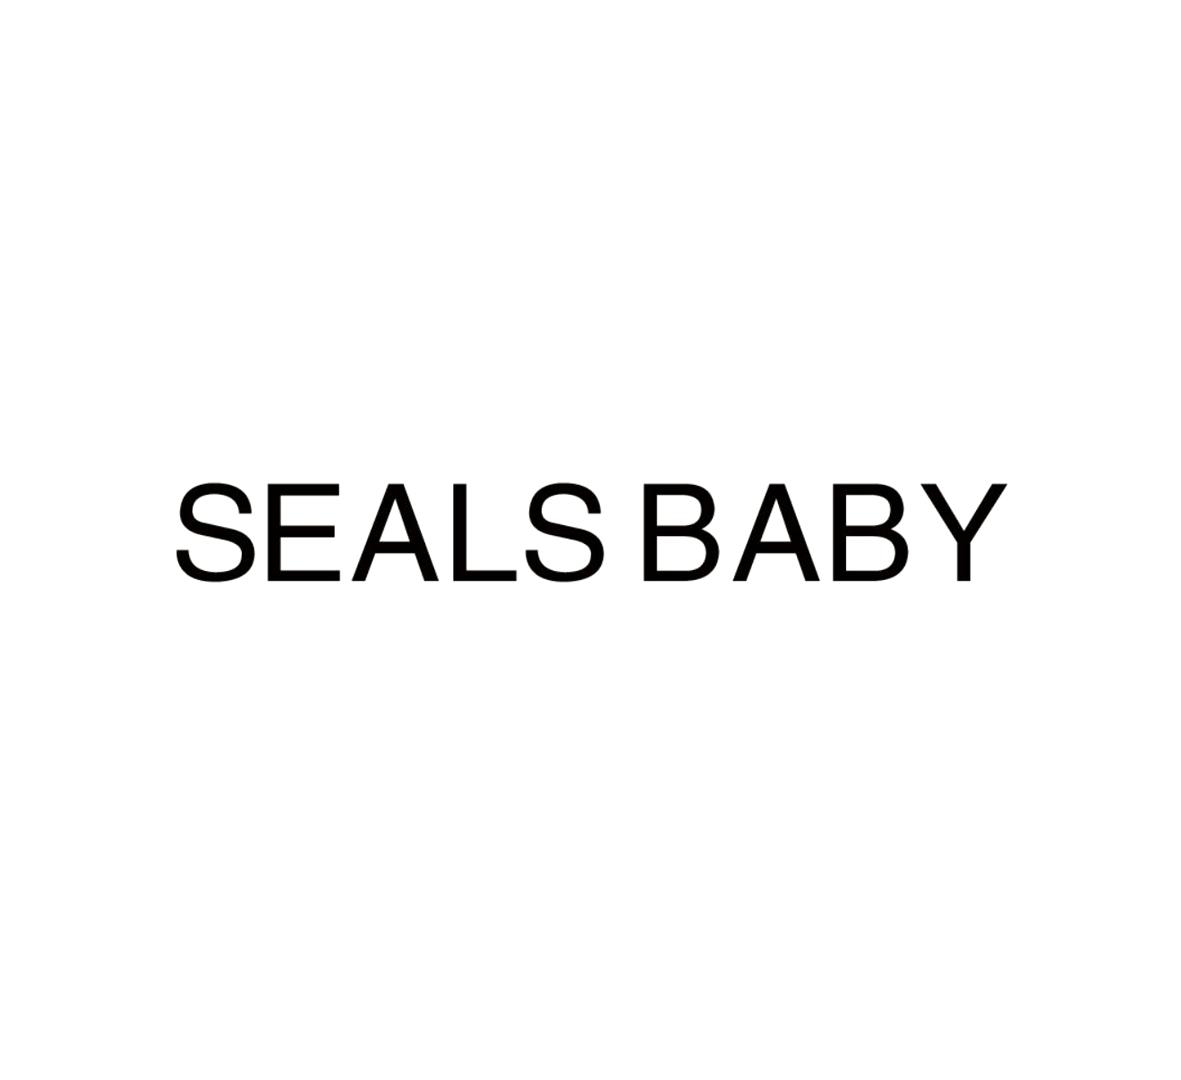 35类-广告销售SEALS BABY商标转让